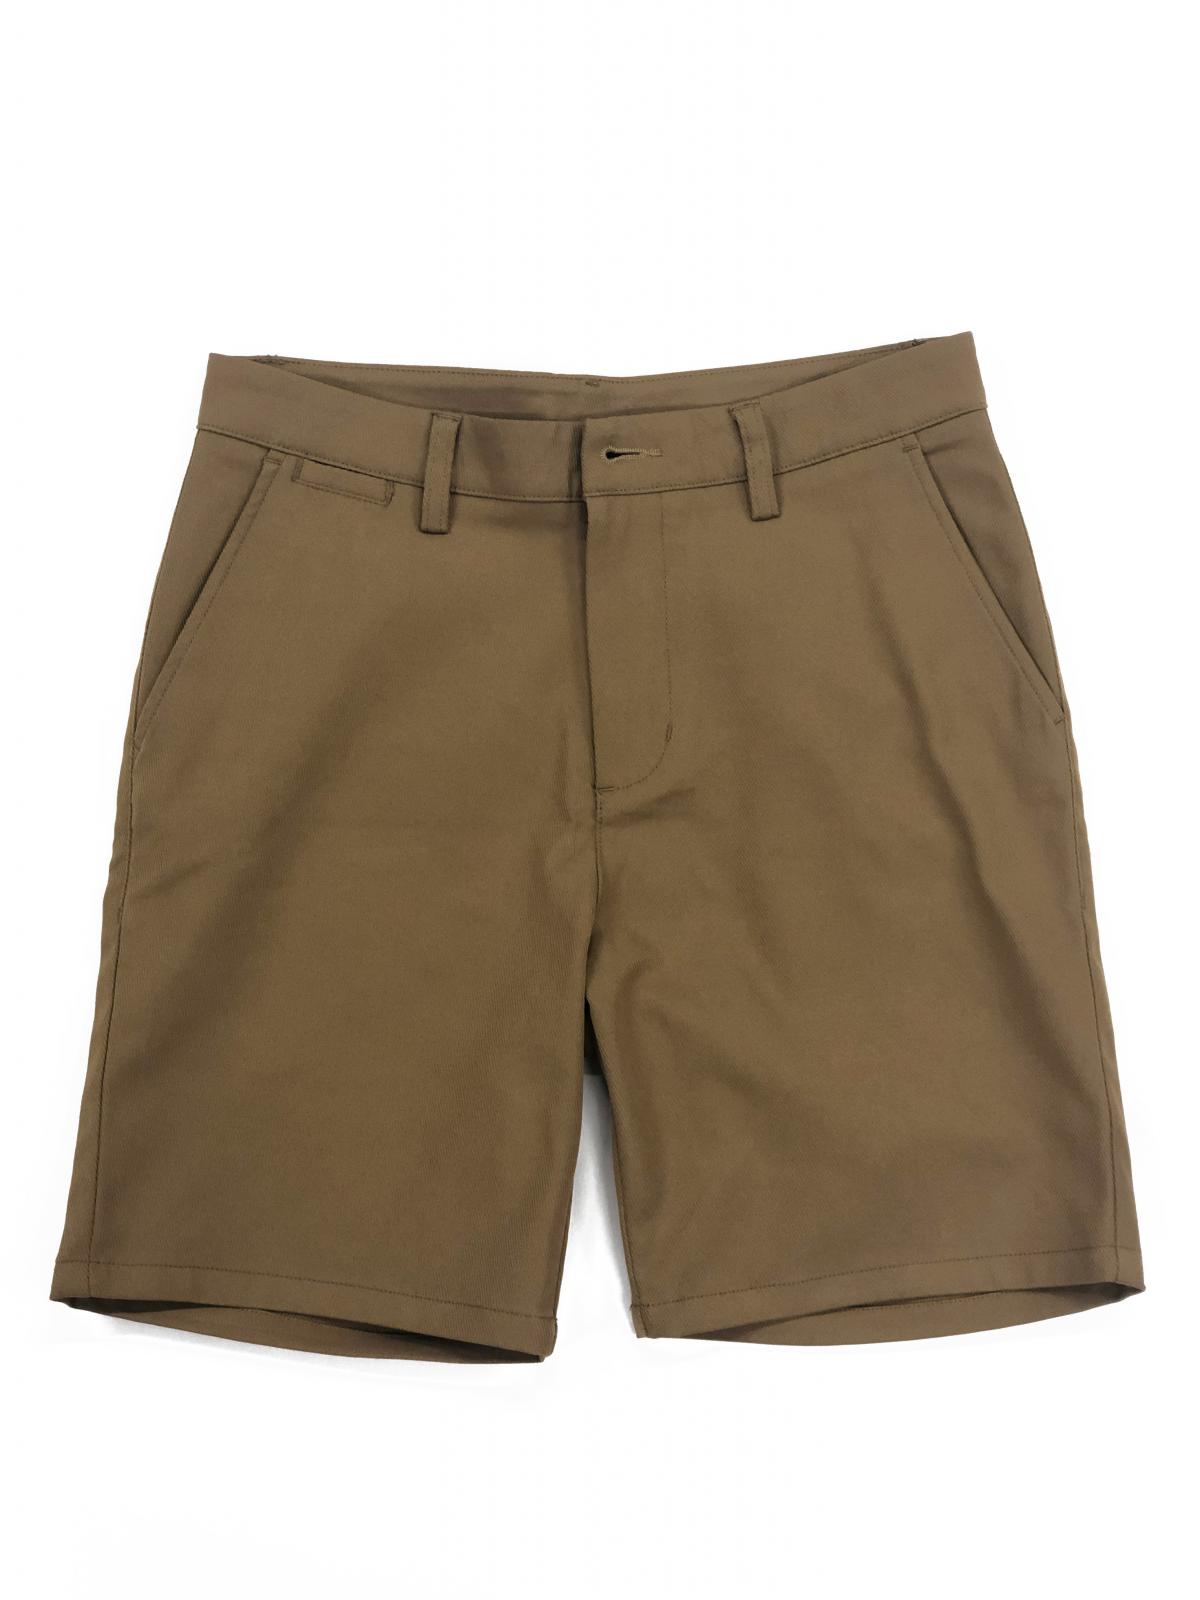 Men's Kaki Shorts SS0005 #0